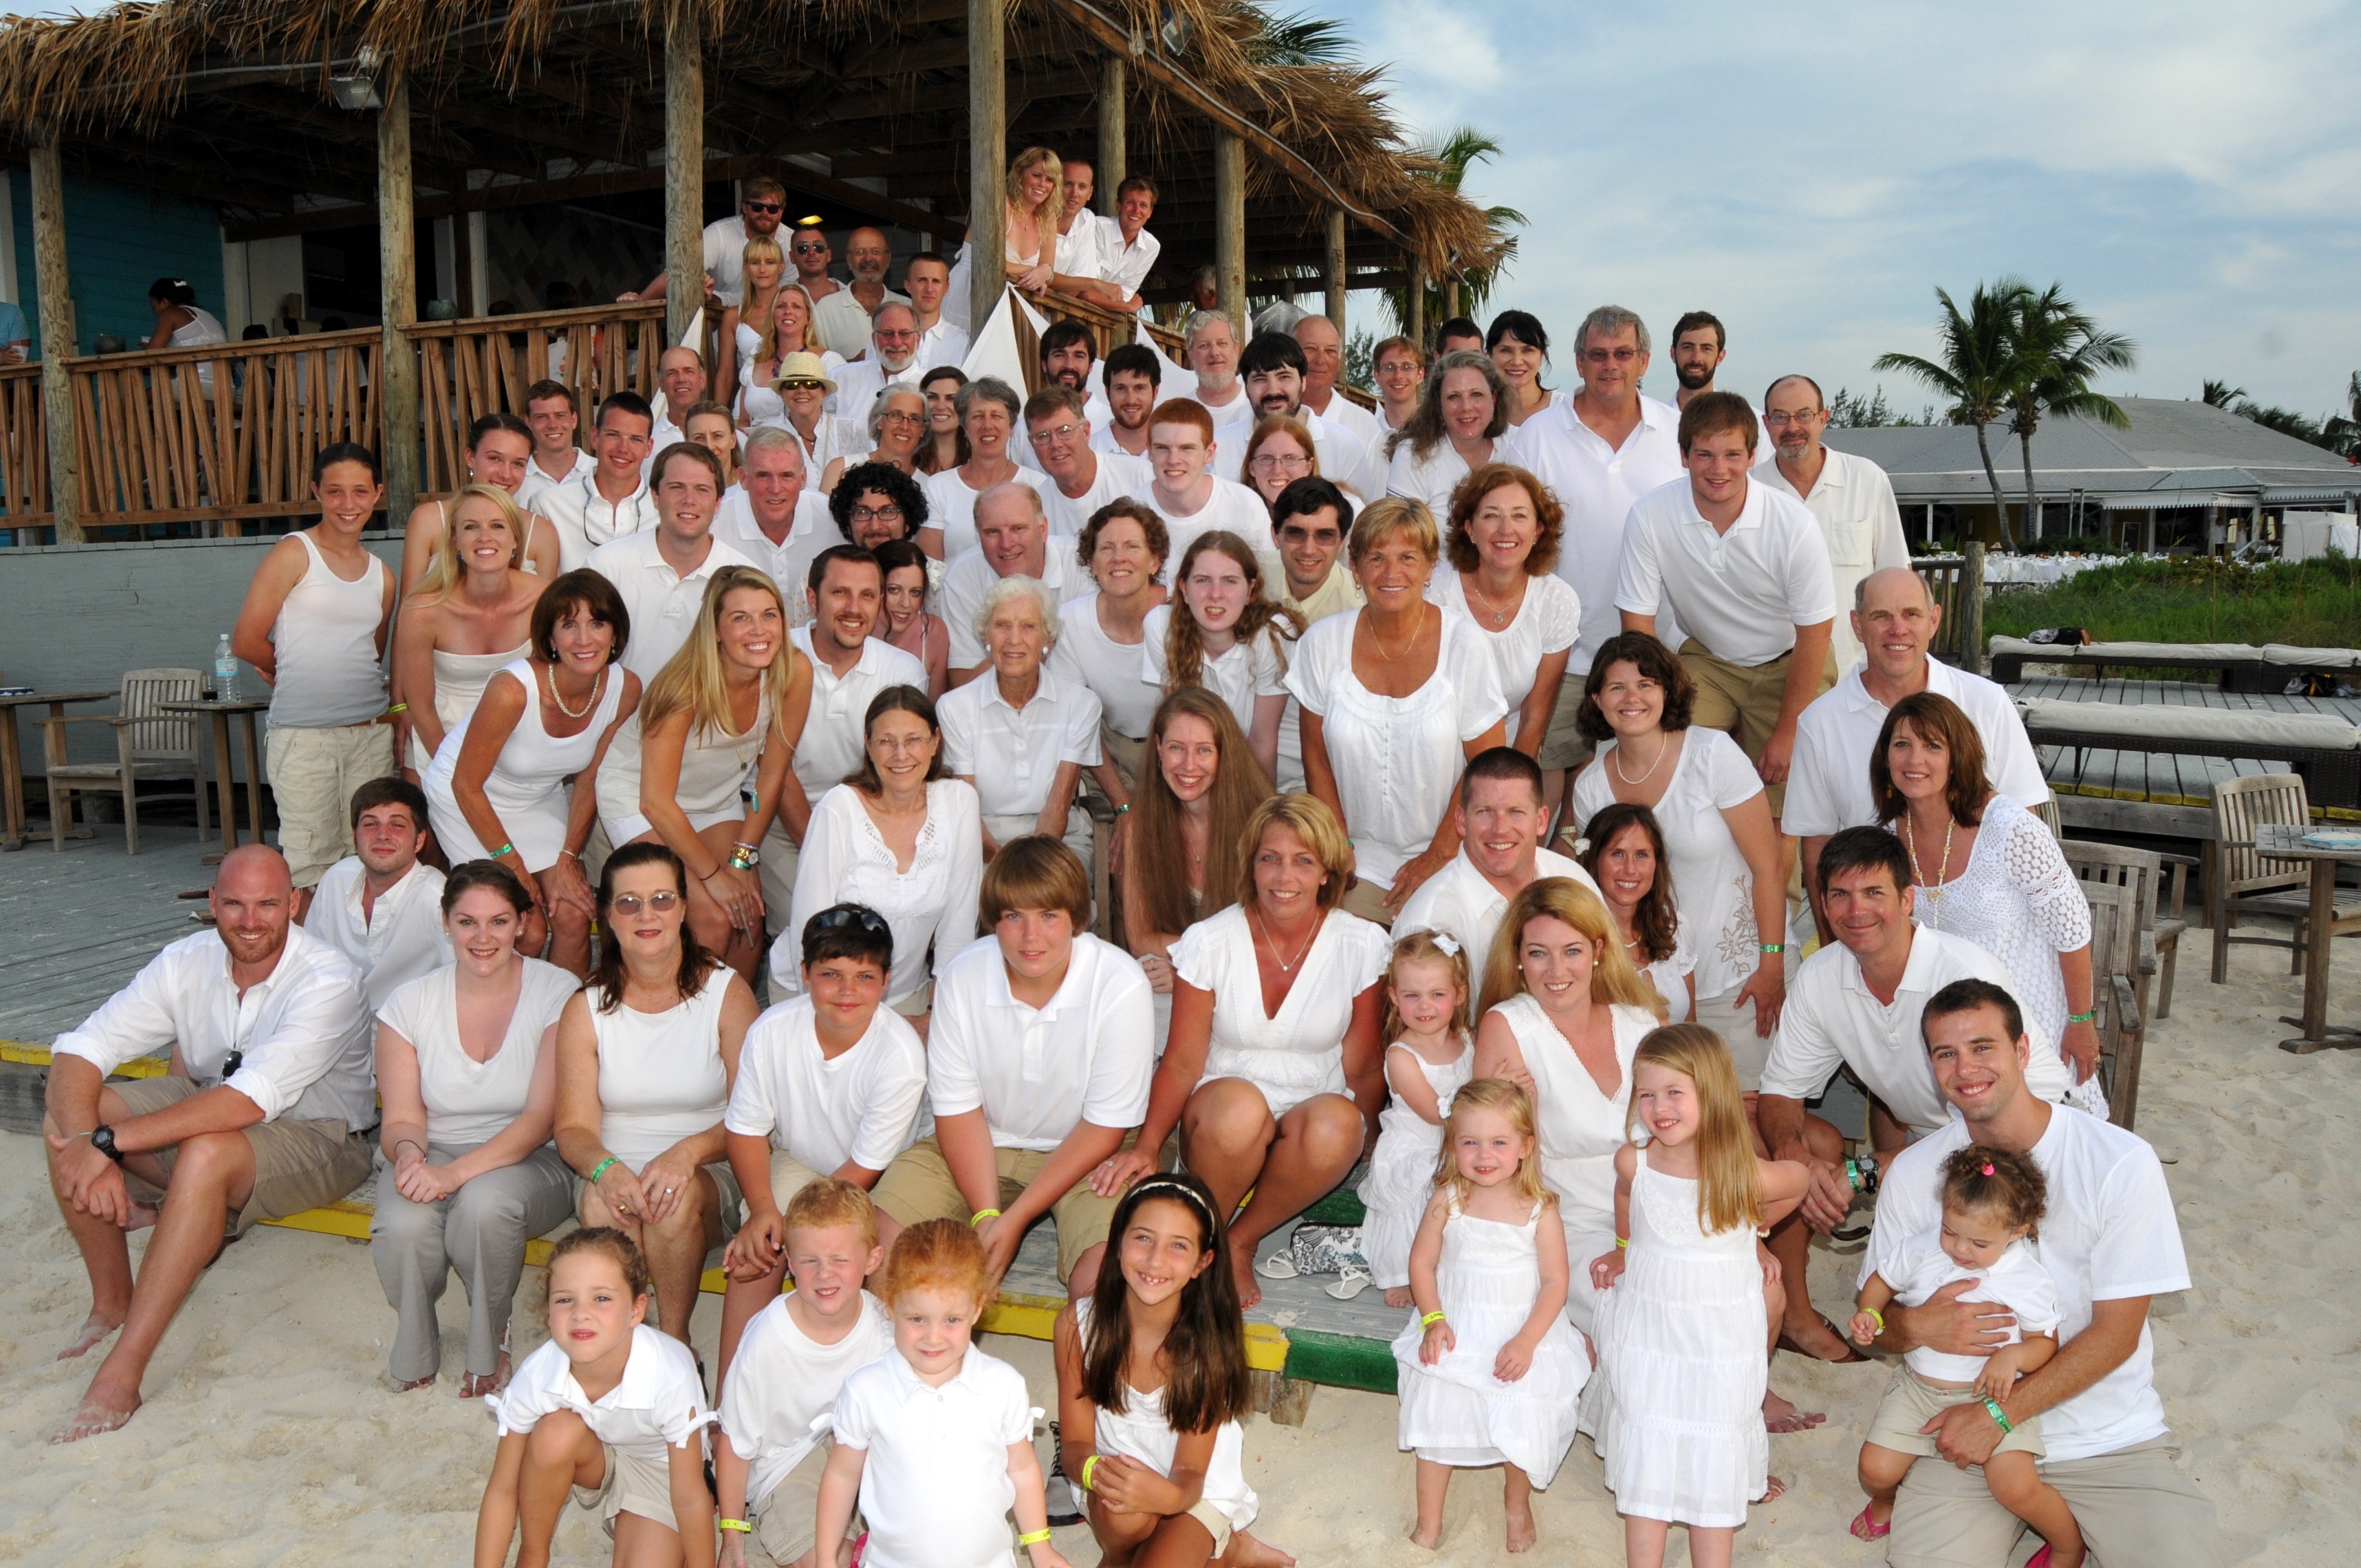 Family Reunion: Club Med Bahamas! - Author Susan Cushman